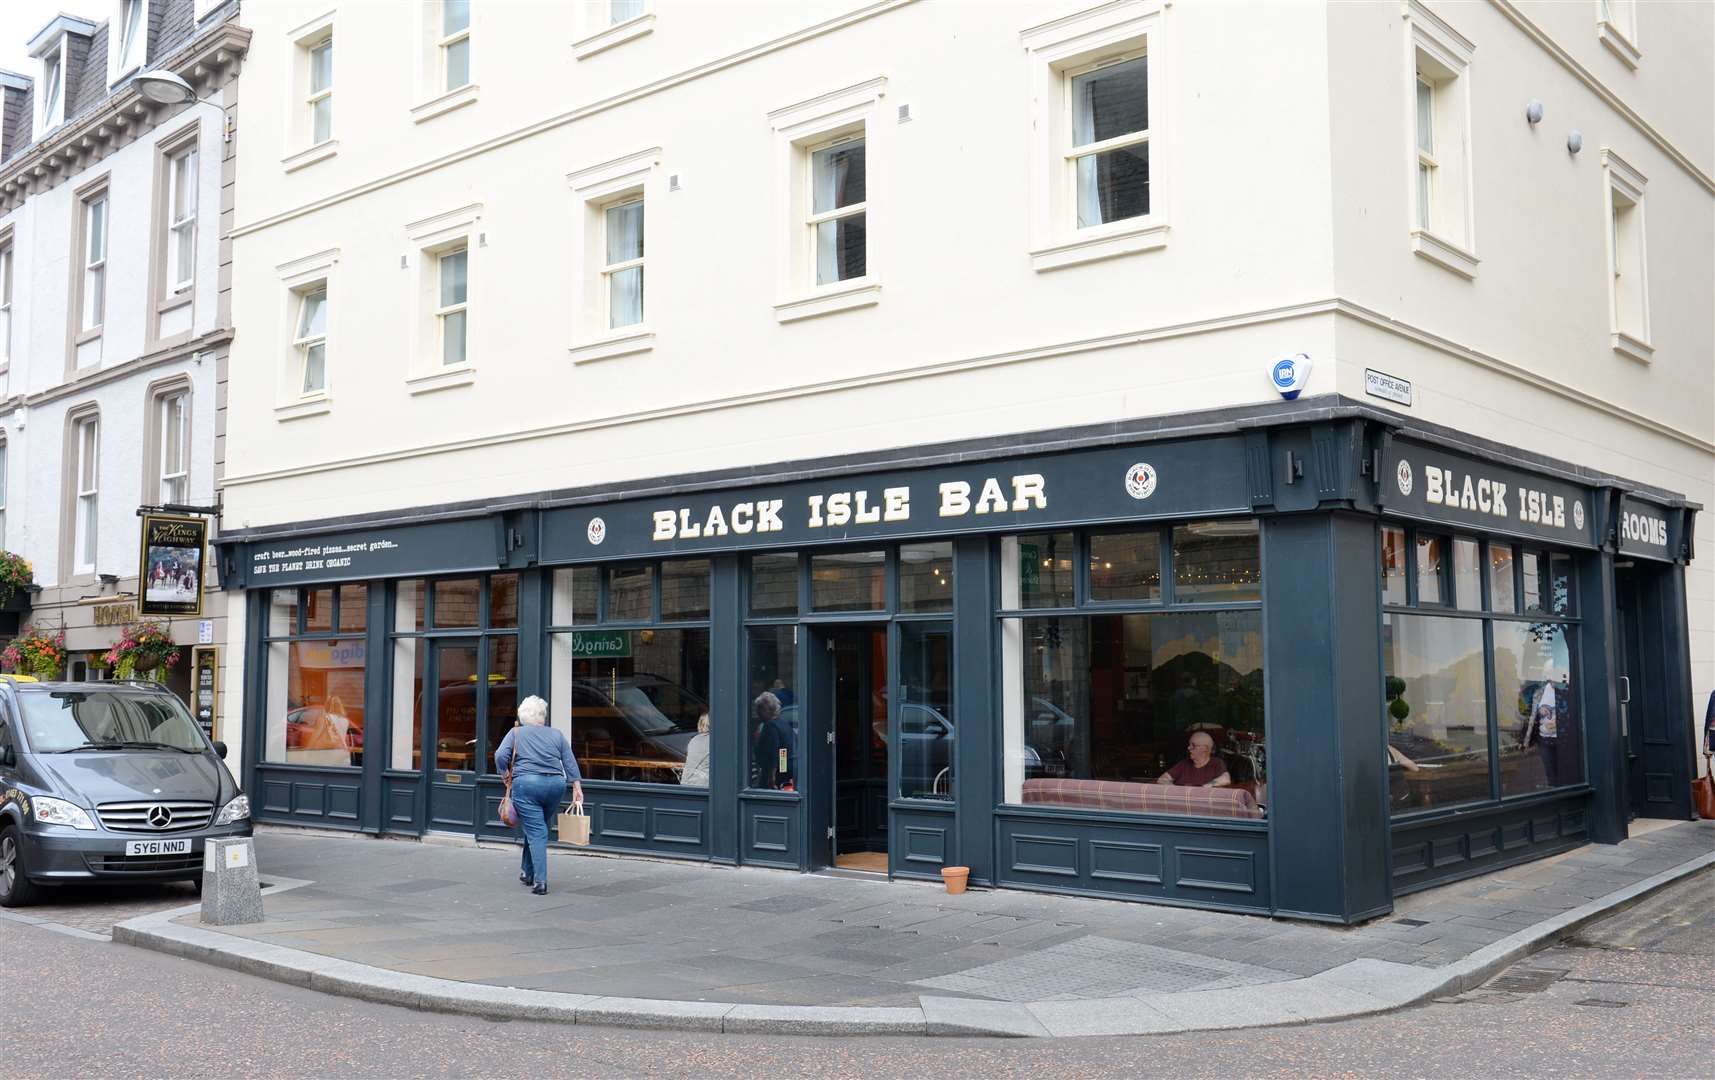 The Black Isle Brewery Bar on Church Street.